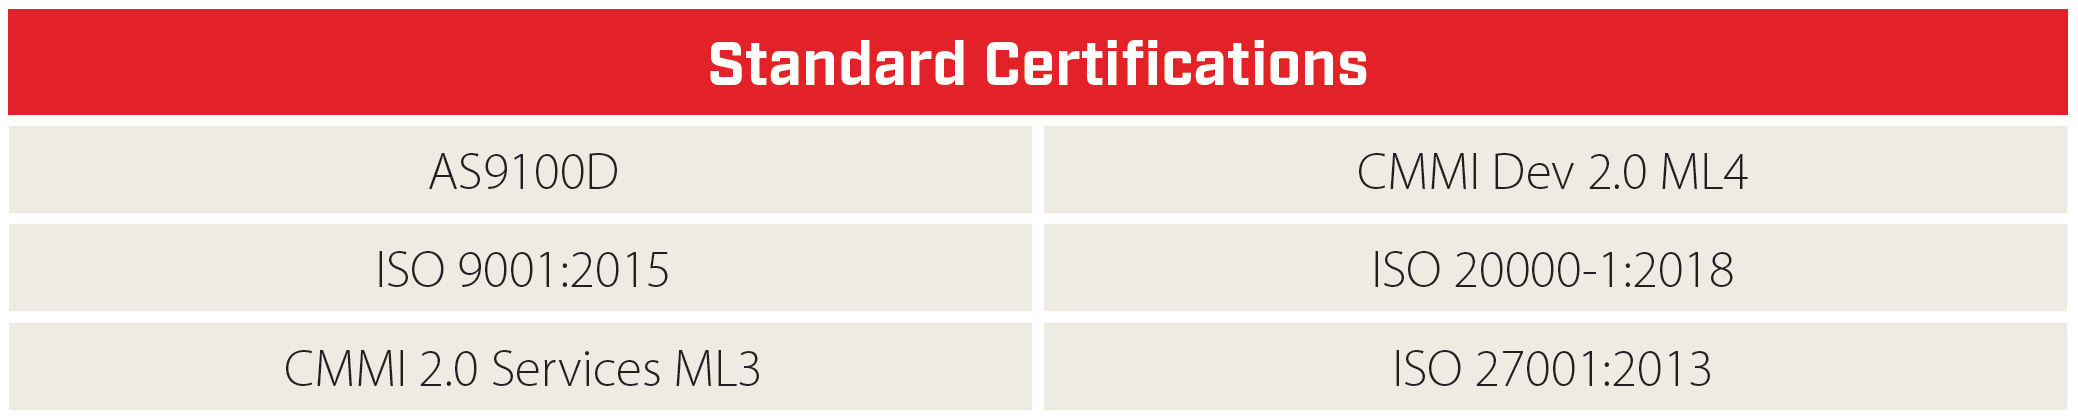 standard certifications